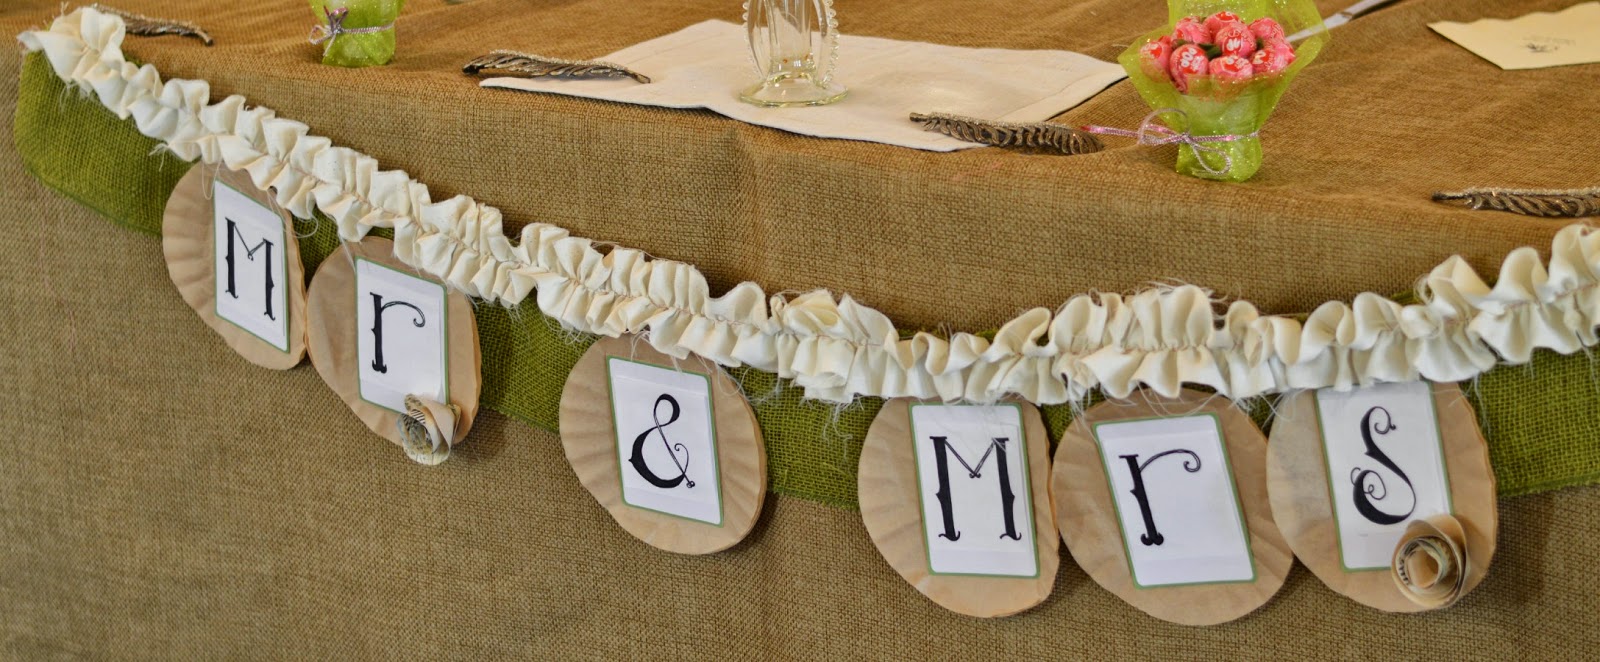 http://craftdictator.com/2014/04/12/diy-wedding-ideas/